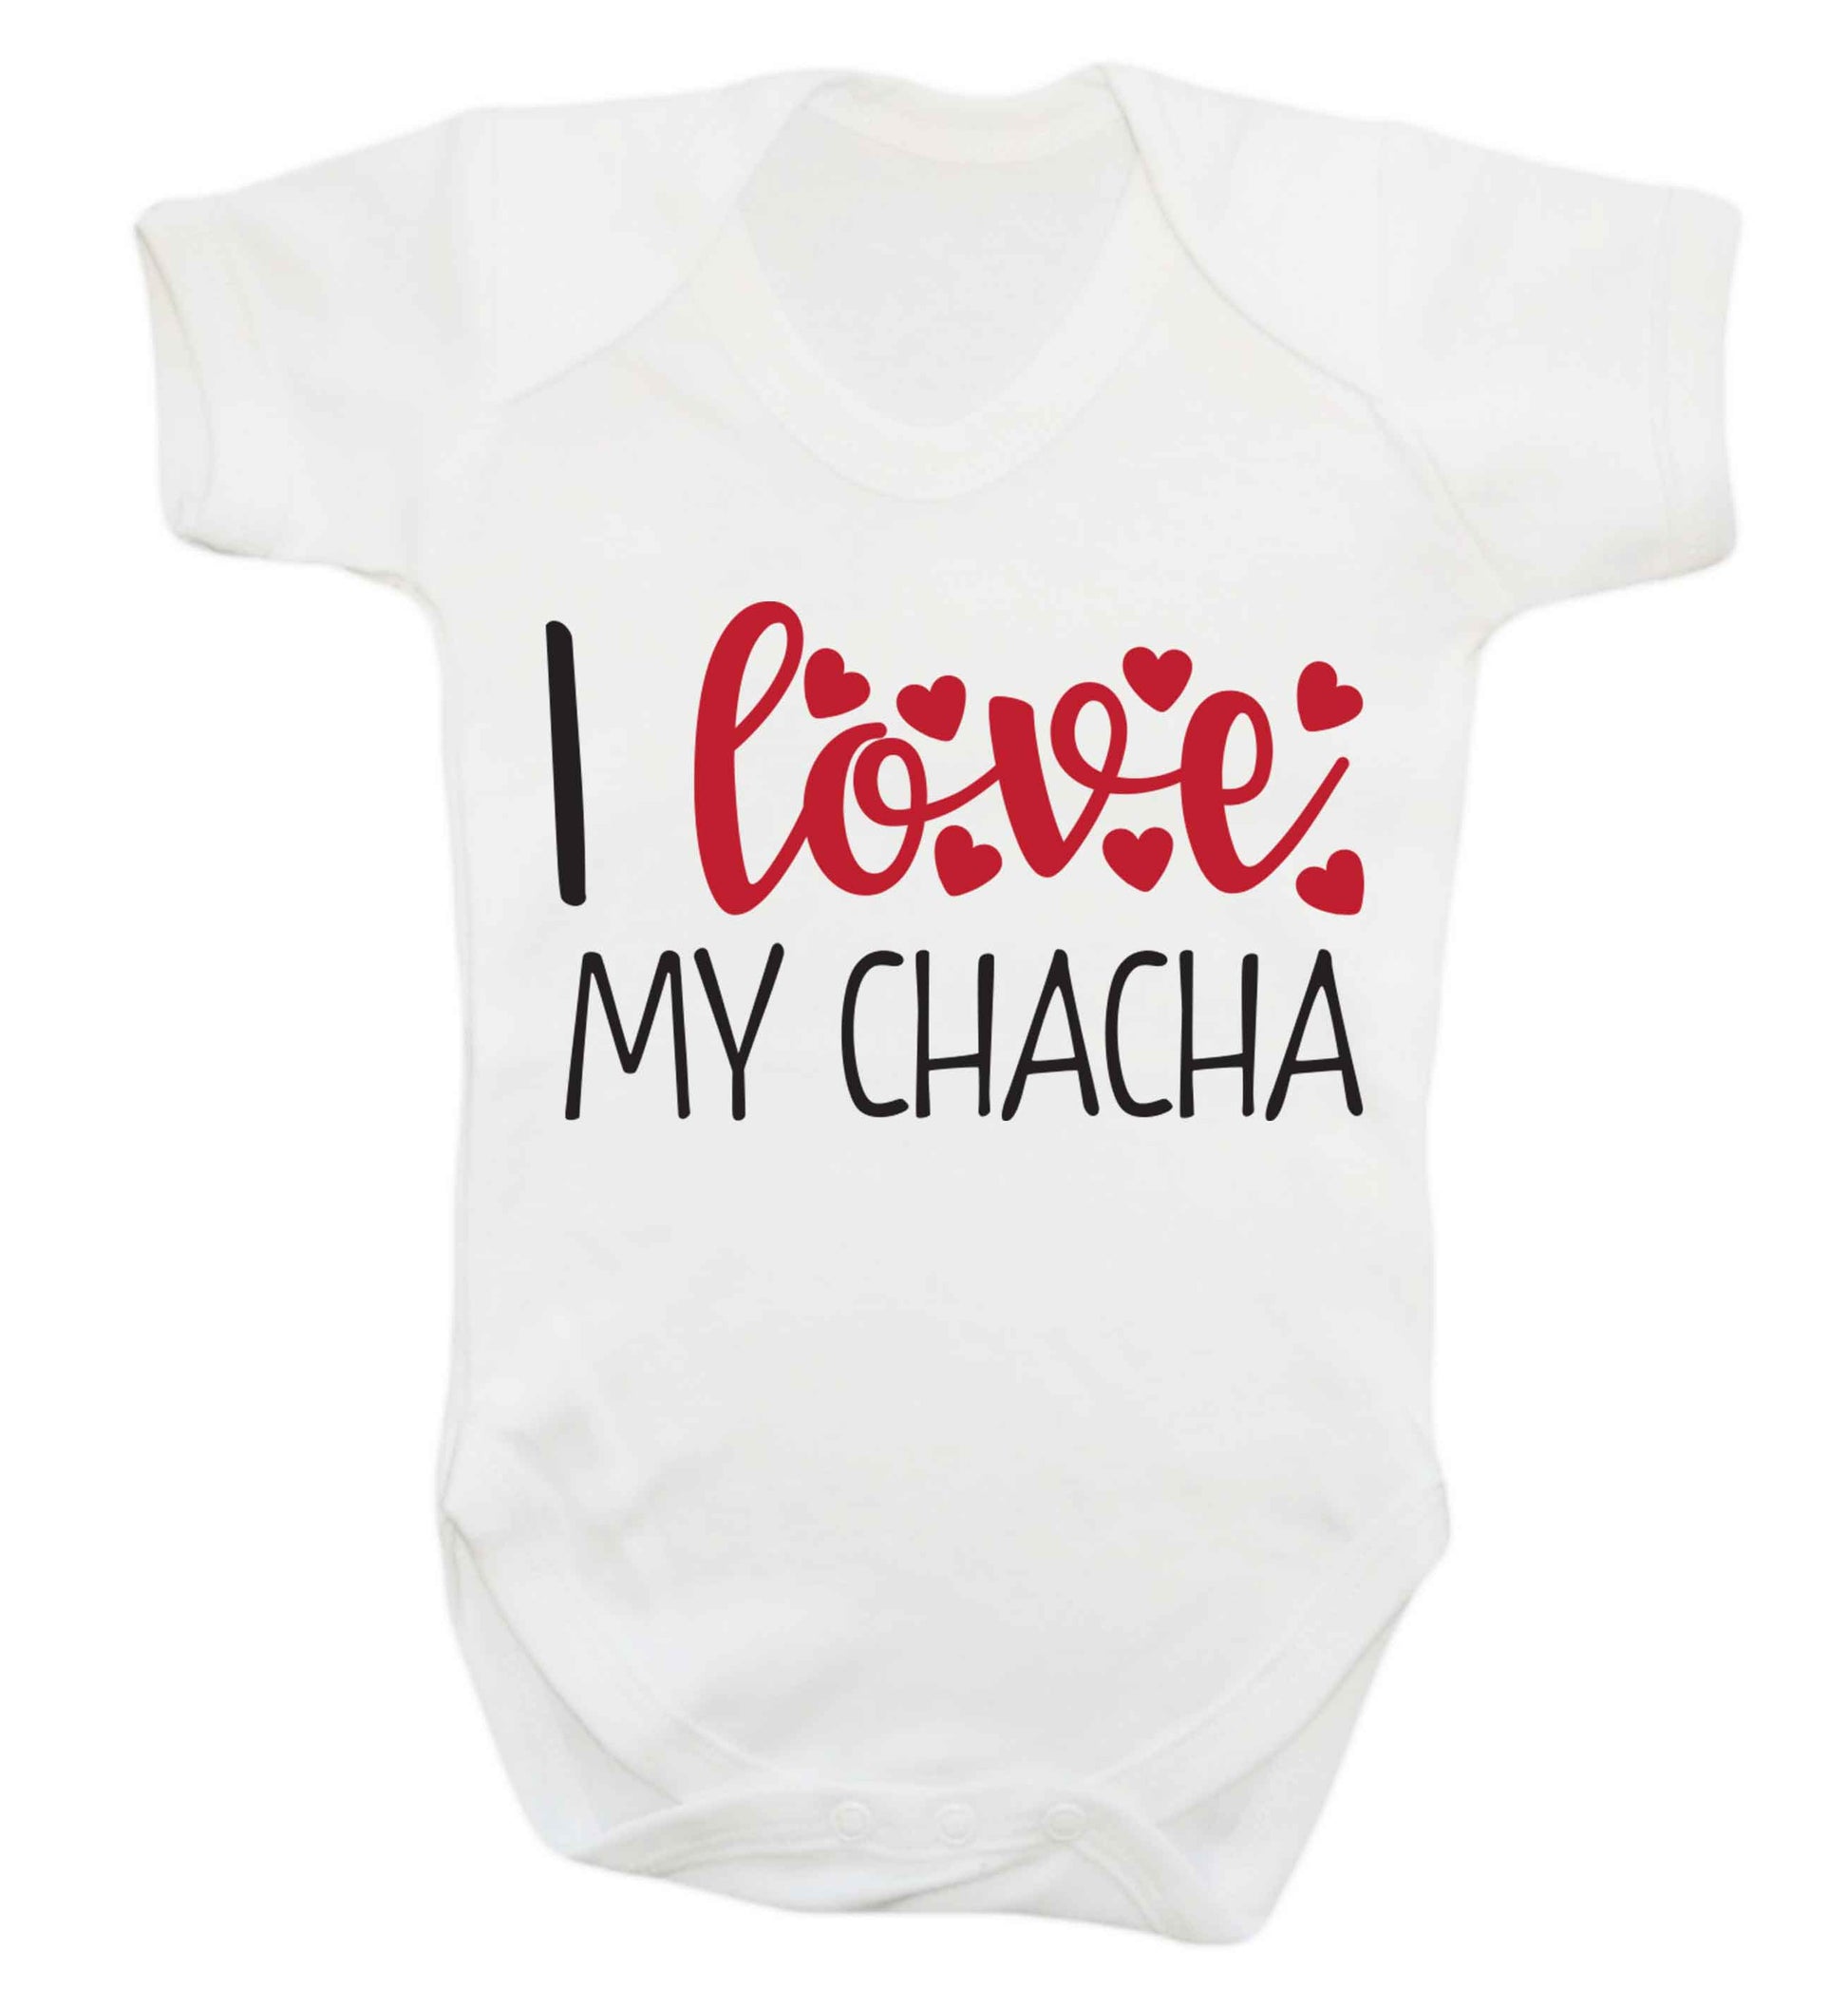 I love my chacha Baby Vest white 18-24 months